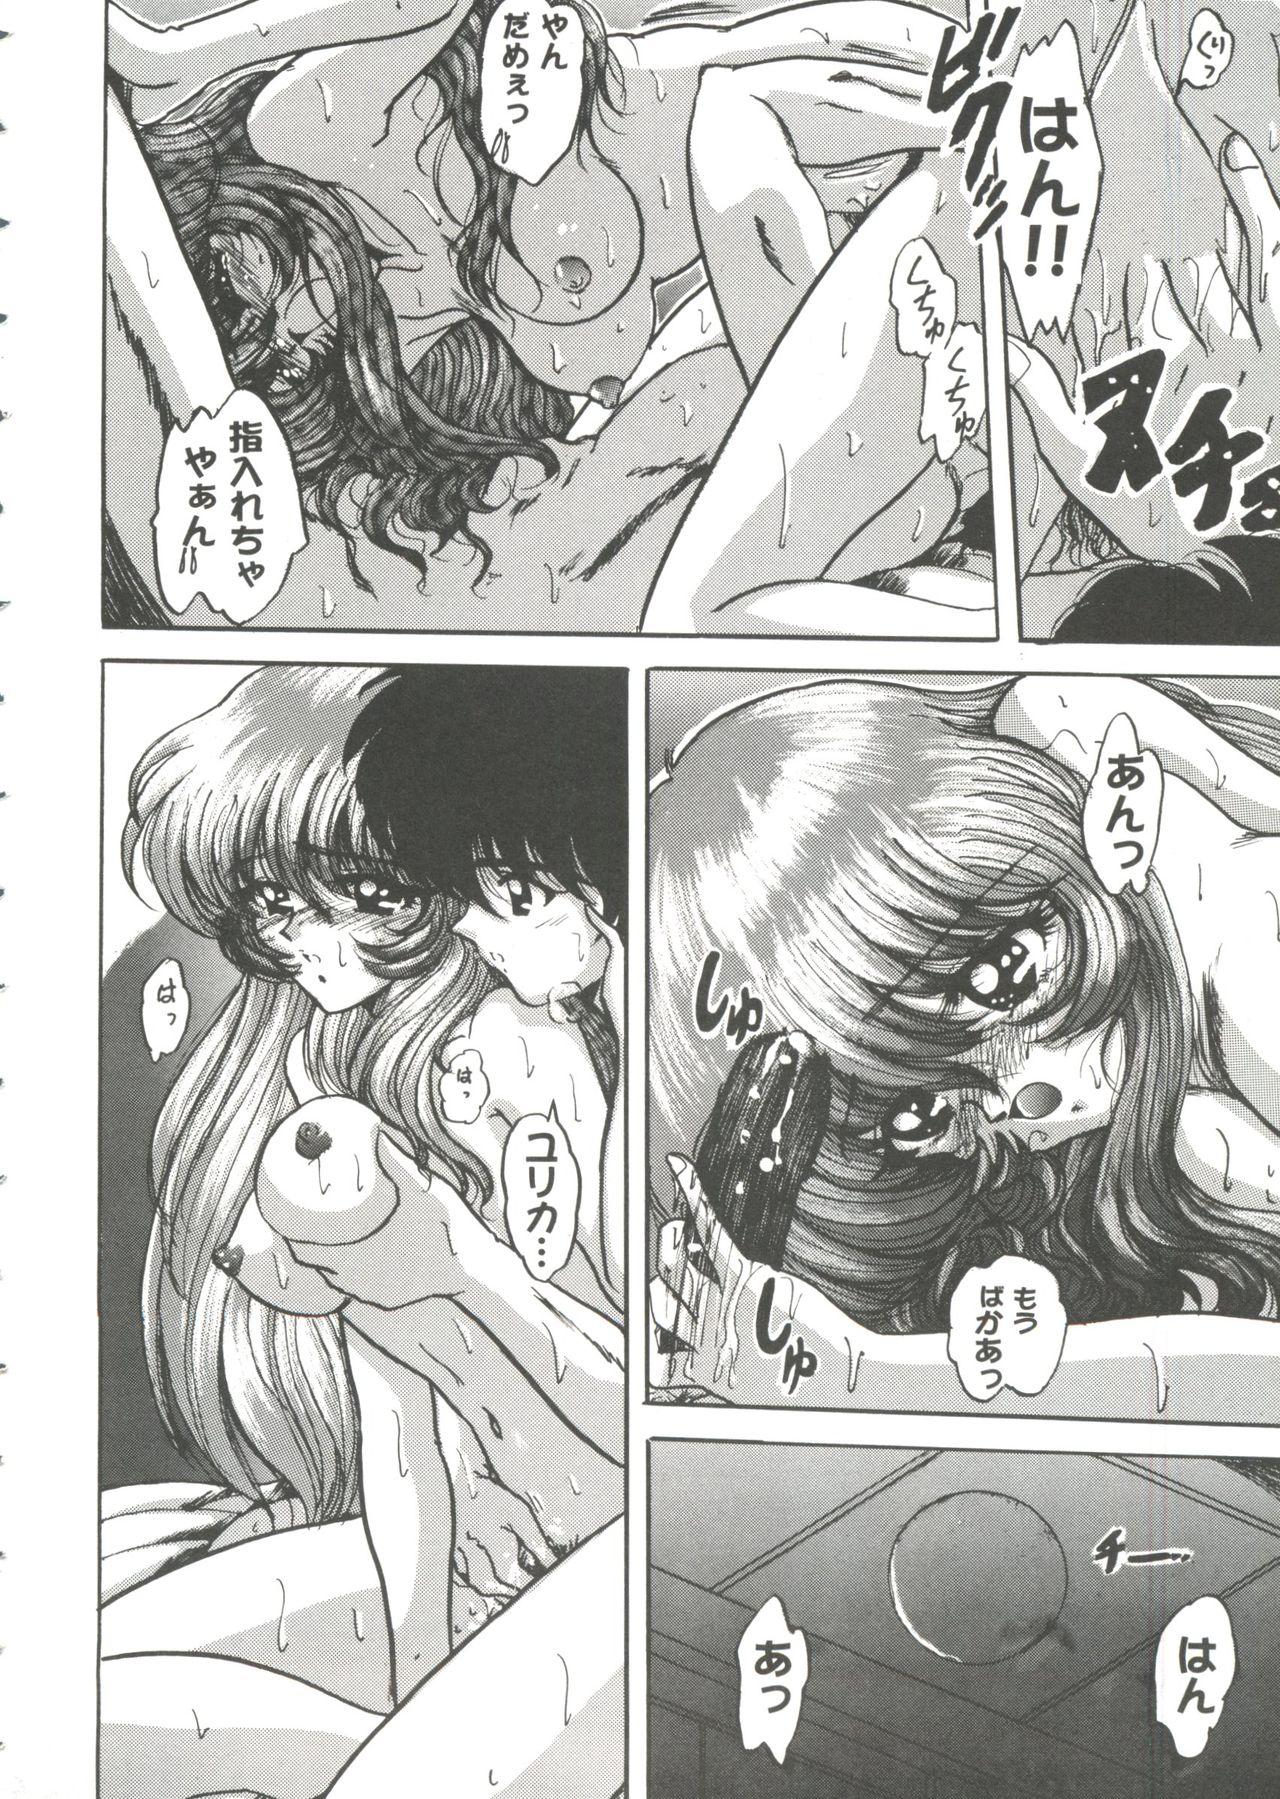 Celeb Girl's Parade 99 Cut 7 - Sakura taisen Martian successor nadesico Rurouni kenshin White album Amateur Sex Tapes - Page 8